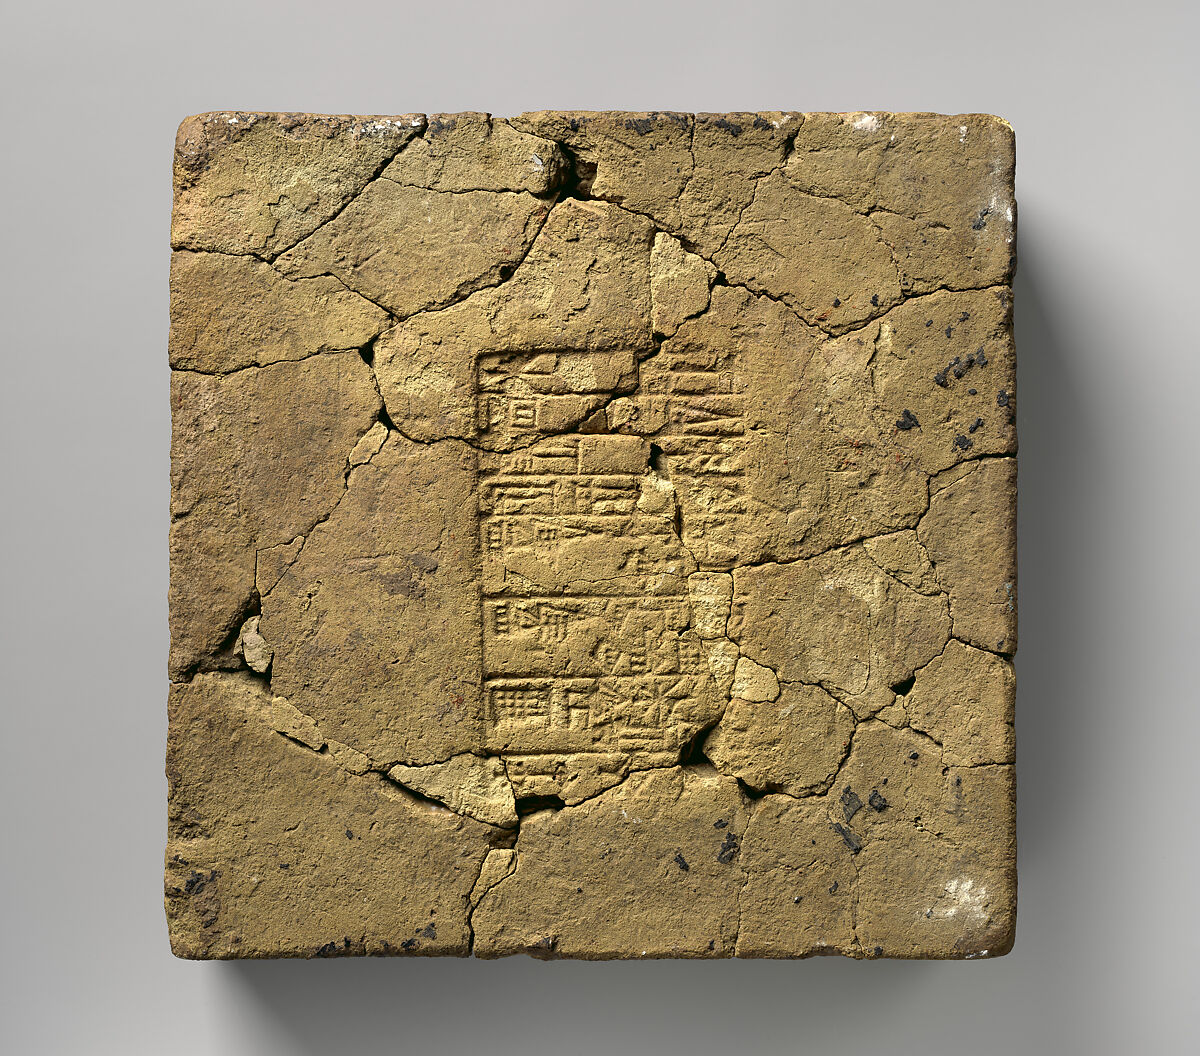 Inscribed brick, Ceramic, glaze, Neo-Sumerian 